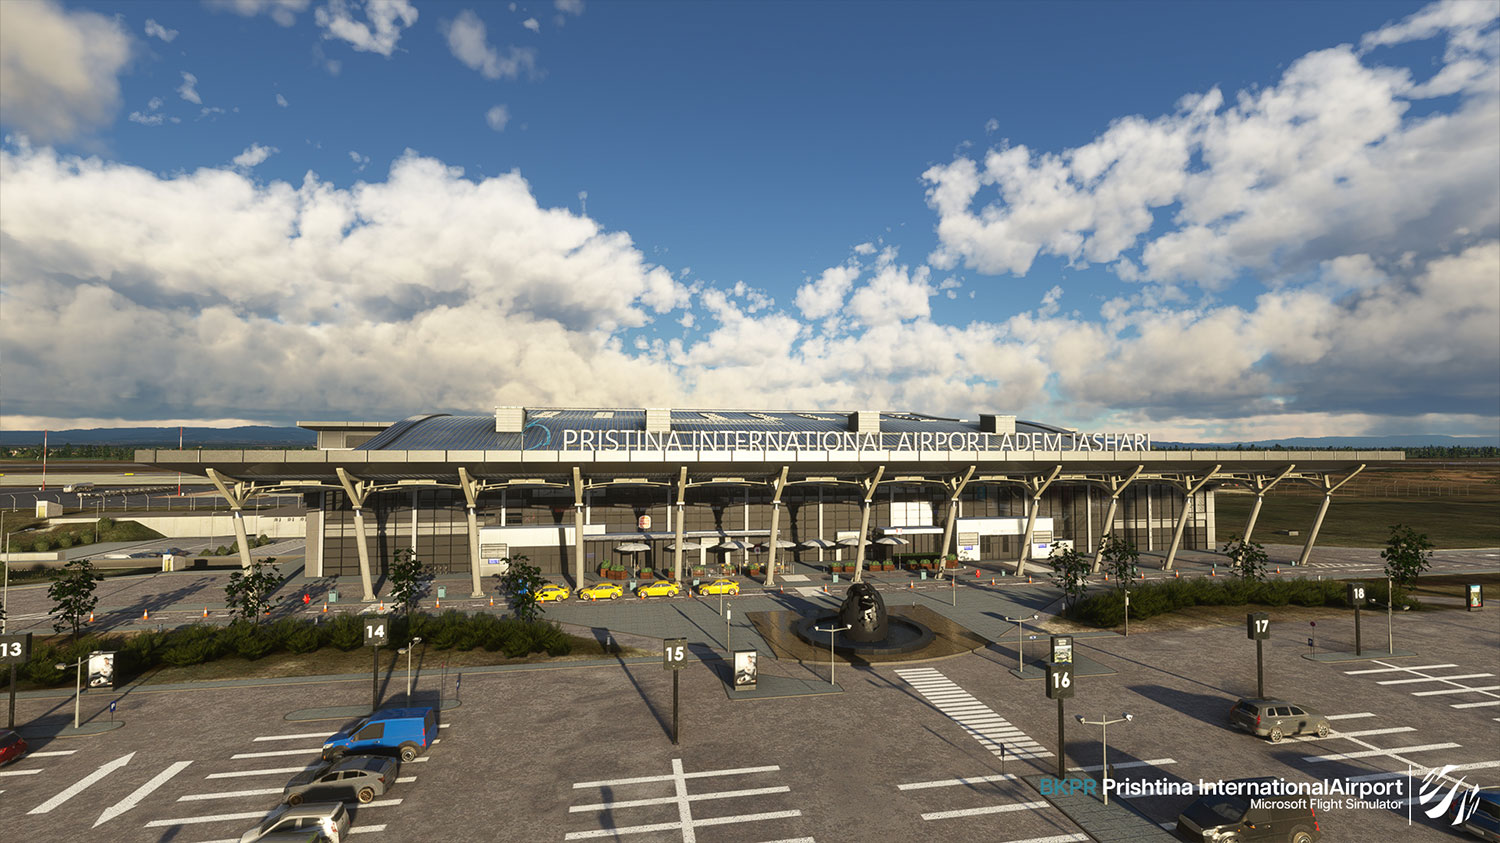 MM Simulations - BKPR - Prishtina International Airport MSFS